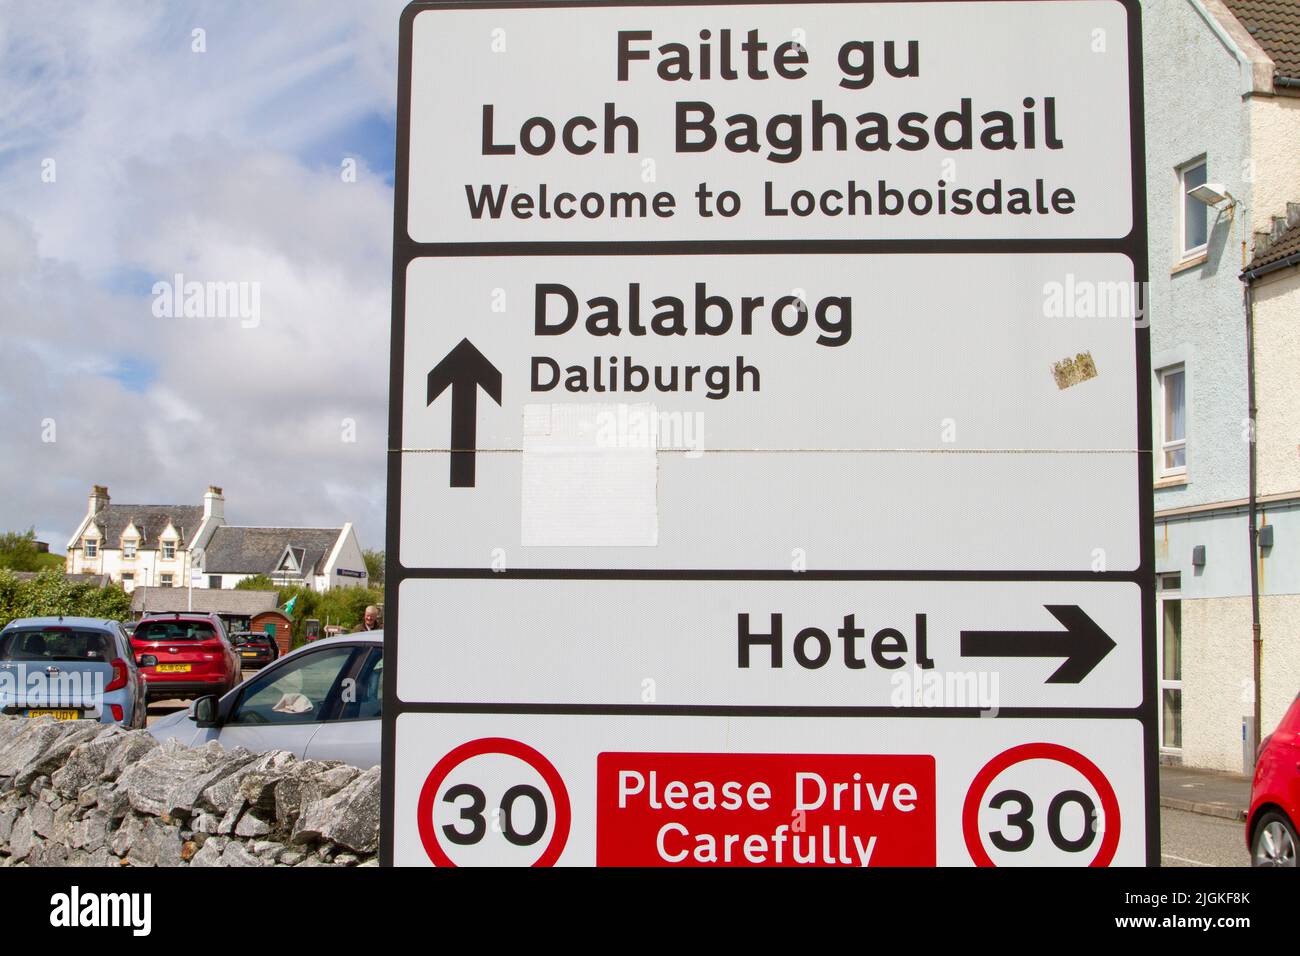 Welcome to Lochboisdale/Failte gu Loch Baghasdail, bilingual road sign in Lochboisdale, South Uist, Outer Hebrides, Scotland Stock Photo